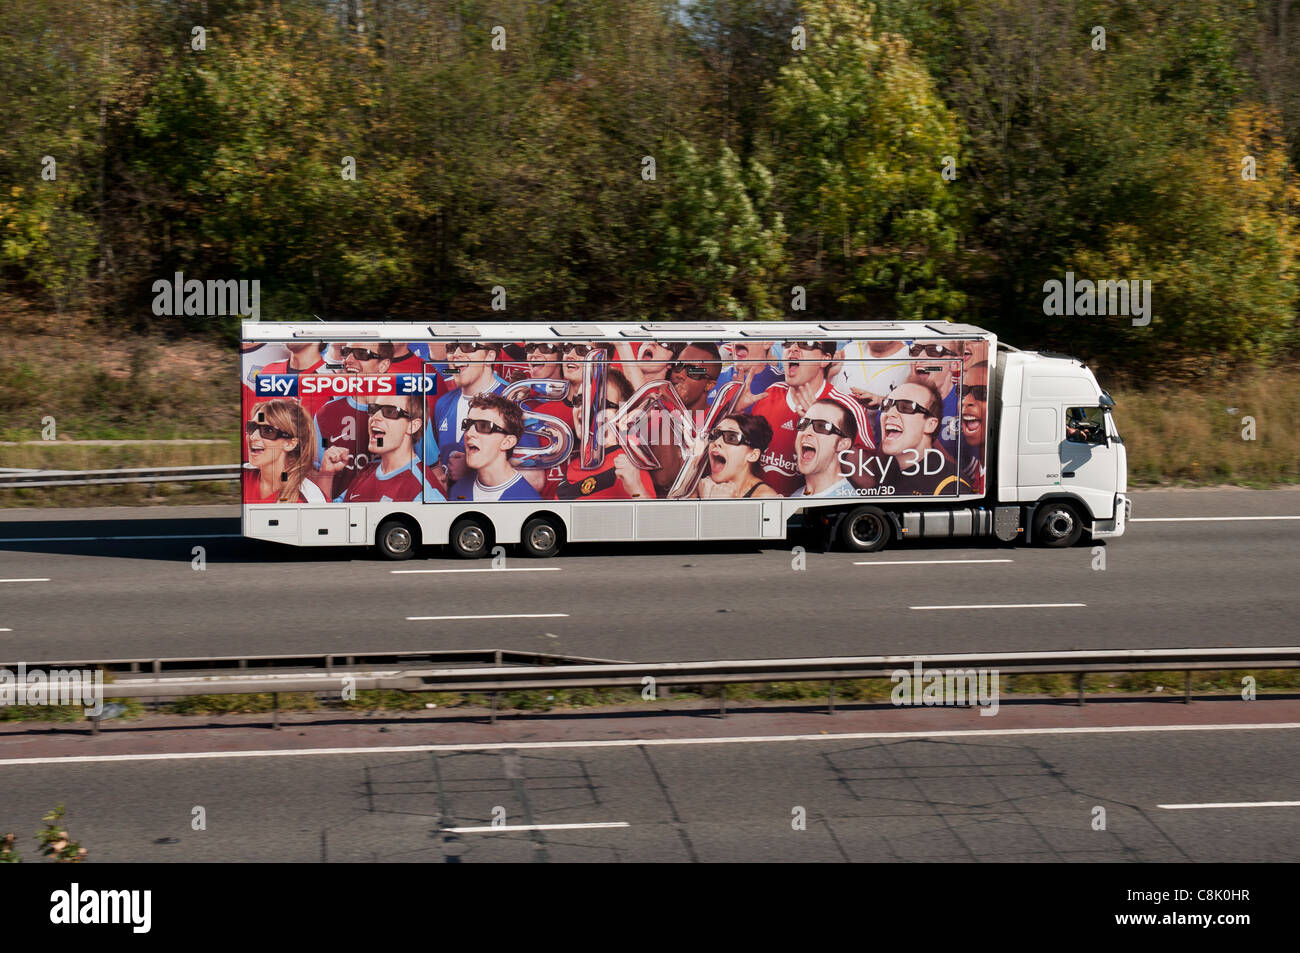 Sky Sports 3D lorry on M40 motorway, Warwickshire, UK Stock Photo